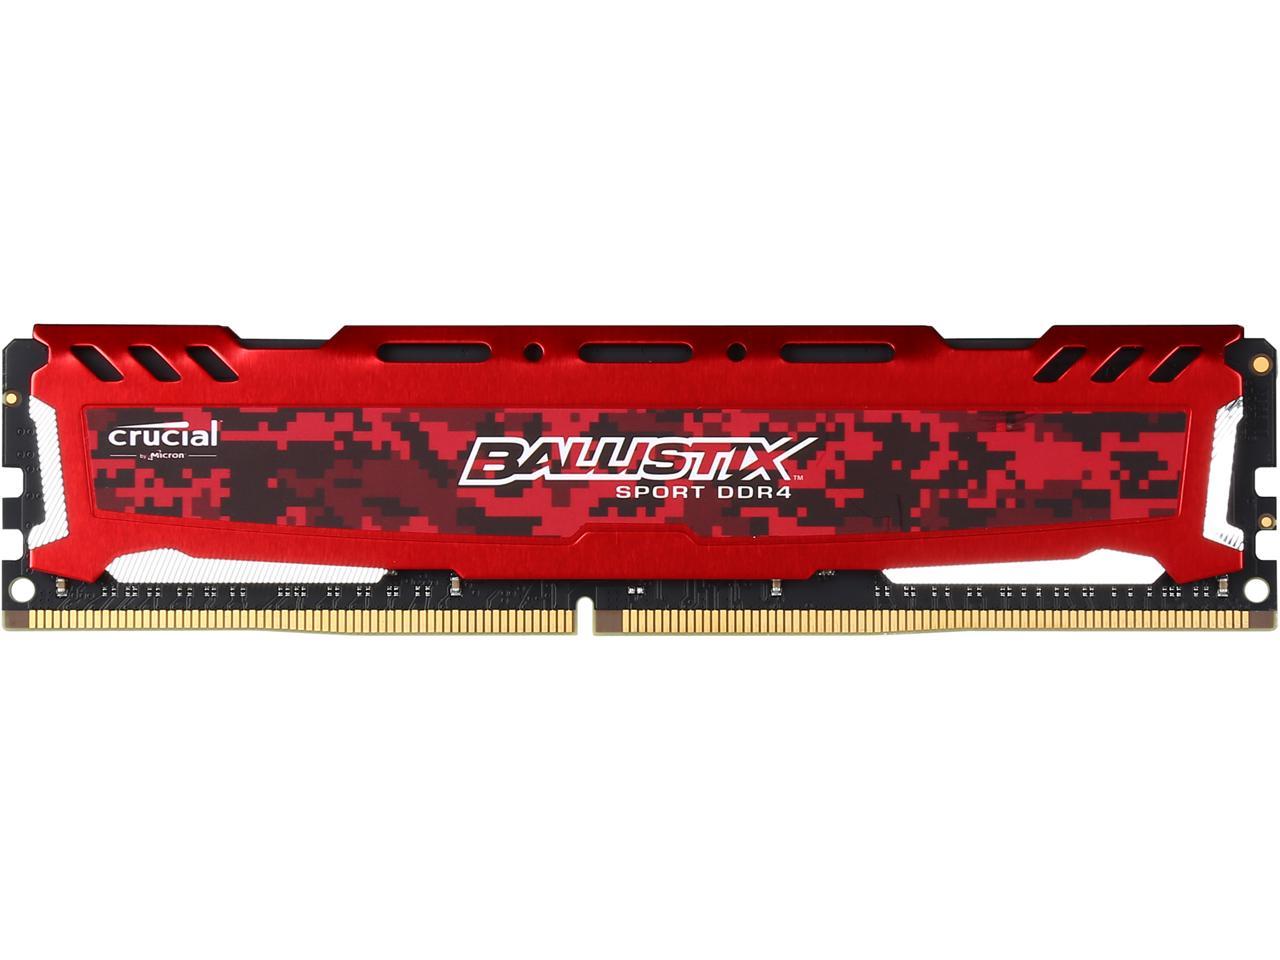 Crucial Ballistix Sport LT 2400 MHz DDR4 DRAM Desktop Gaming Memory Single 4GB CL16 BLS4G4D240FSE Red 